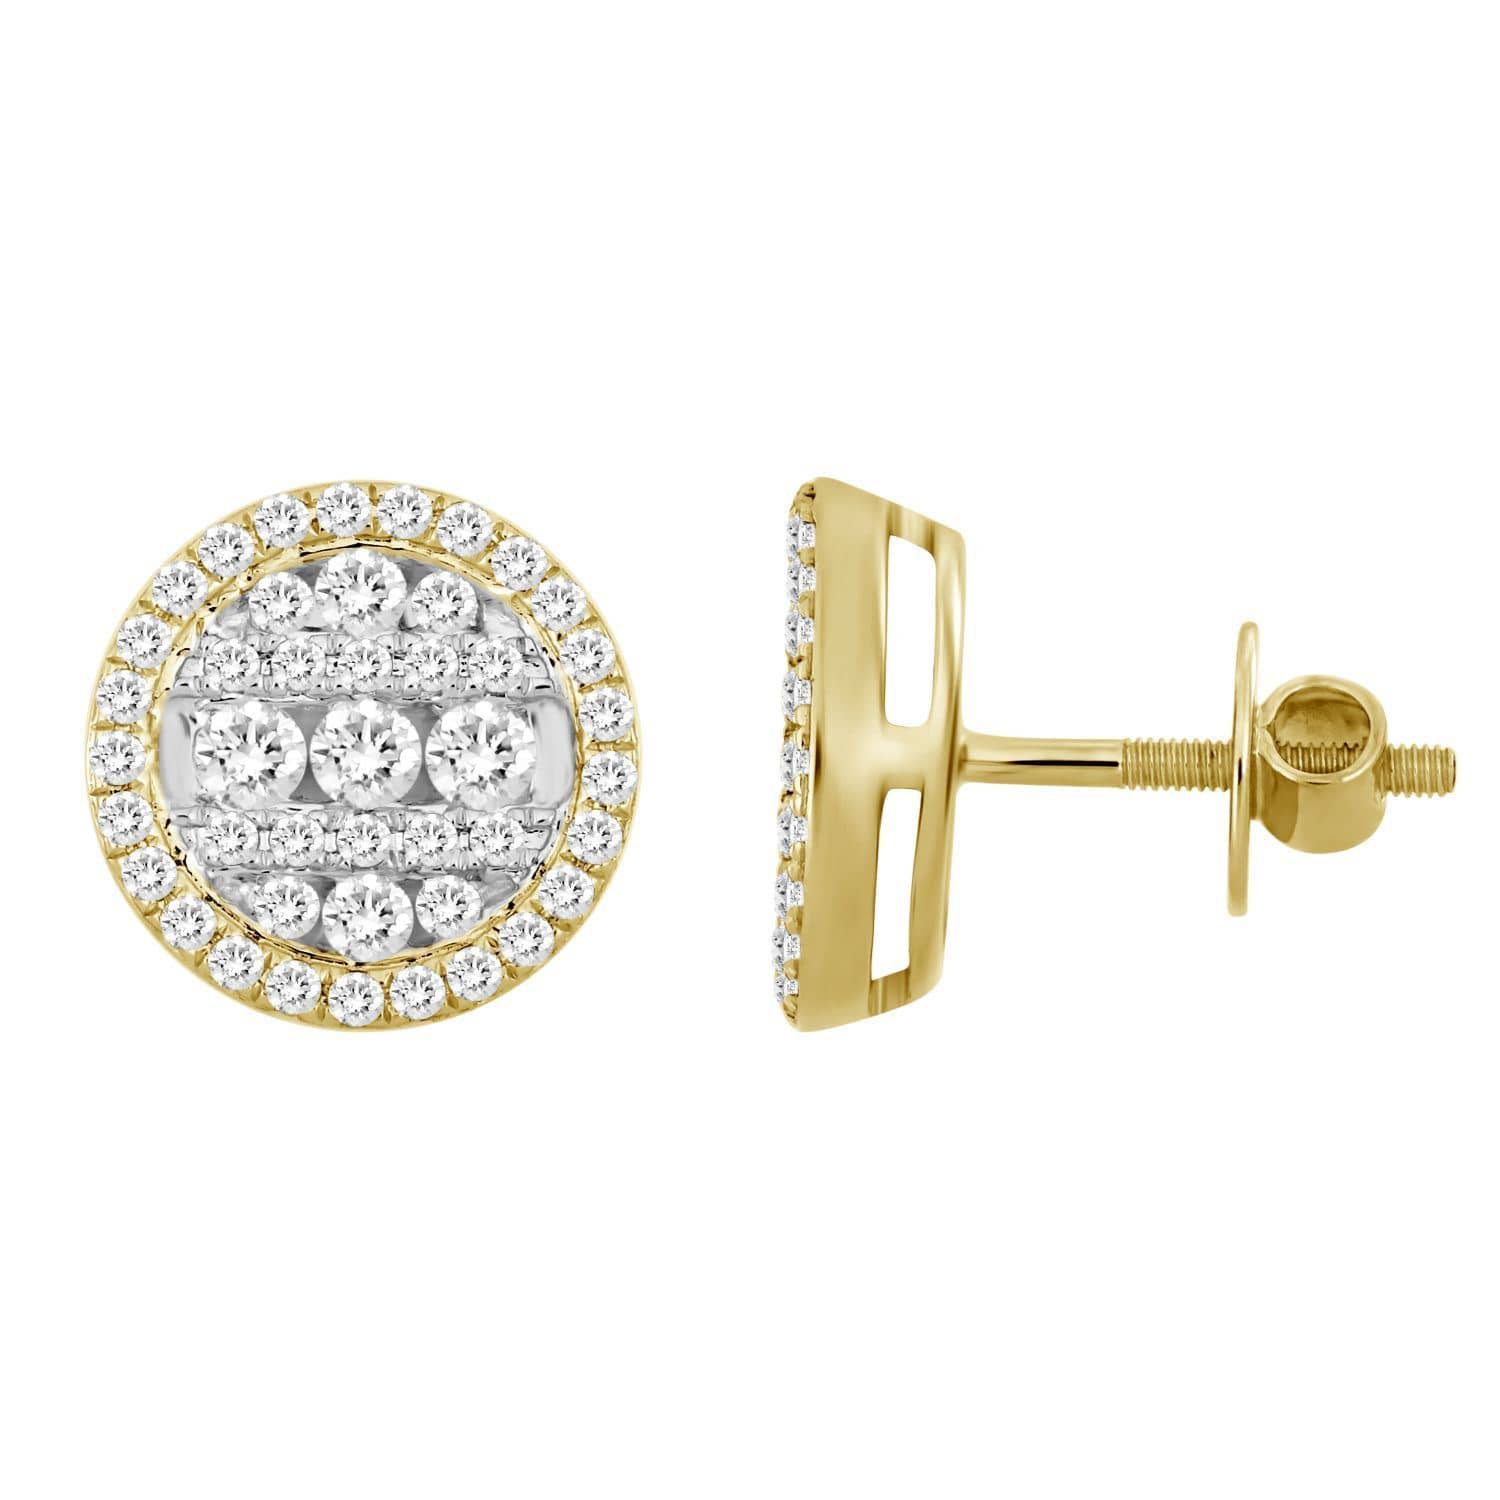 0013217_mens-earring-1-ct-round-diamond-10k-yellow-gold.jpeg